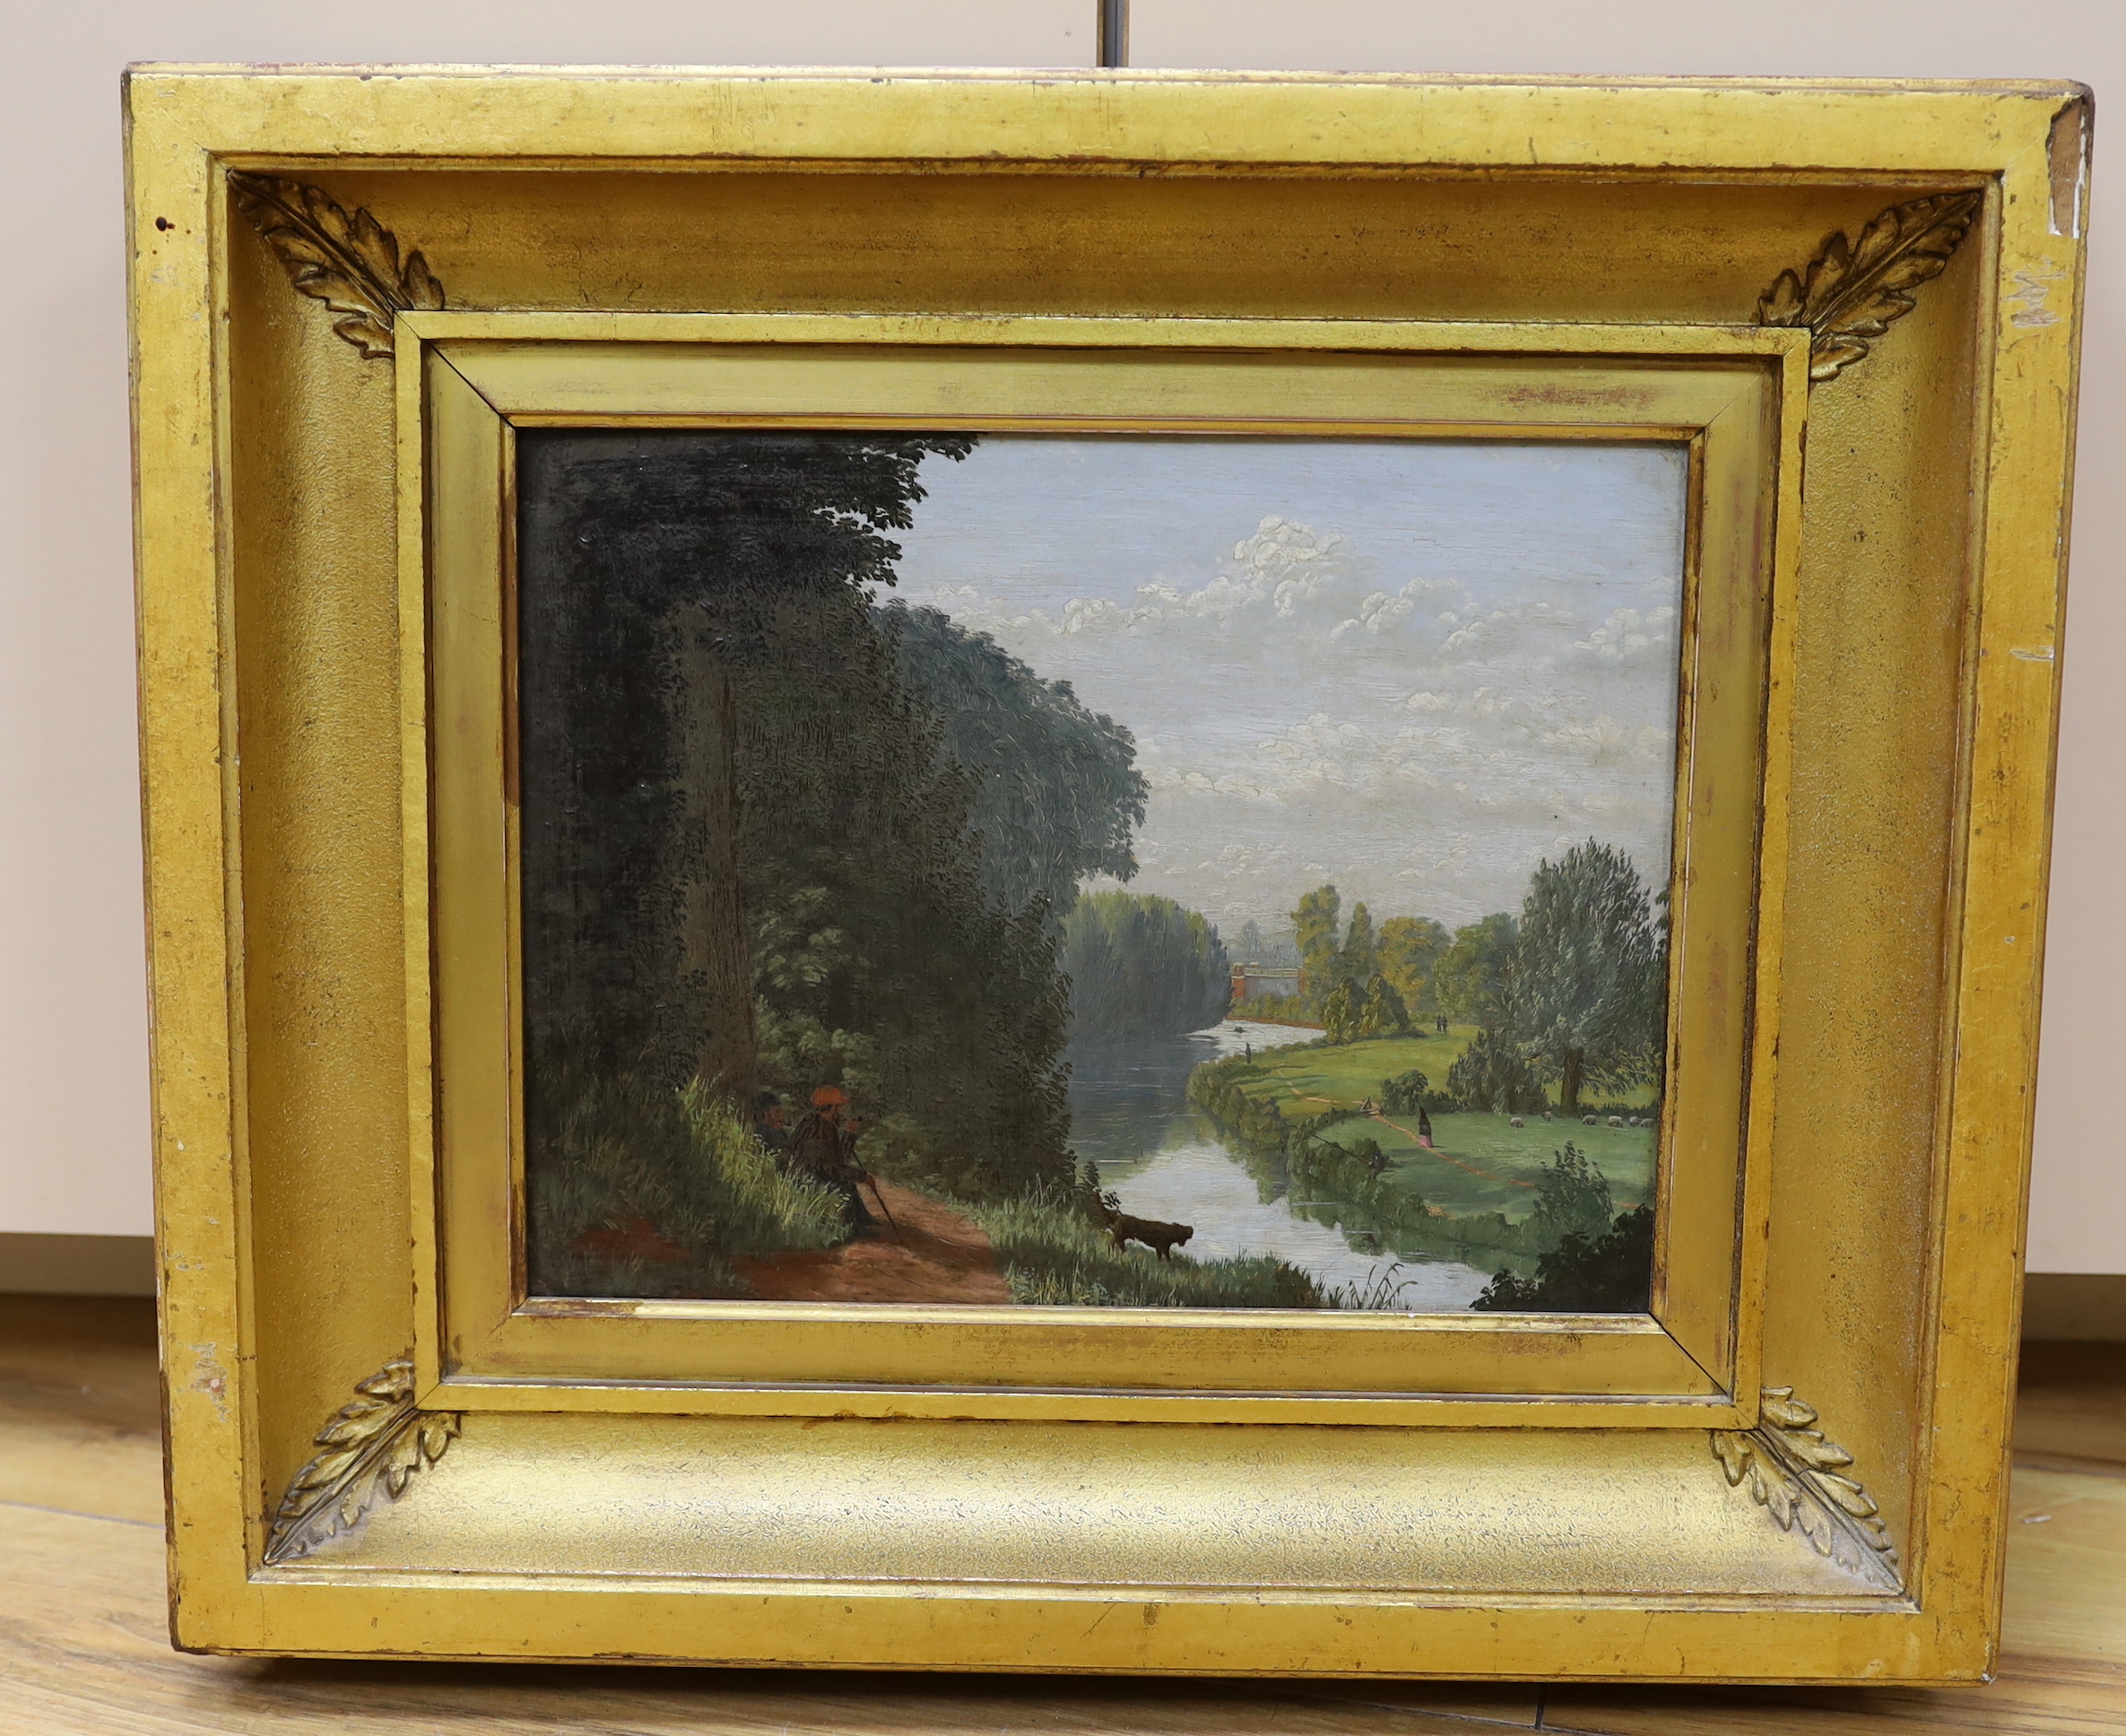 19th century Continental School, oil on board, River landscape, ornate gilt frame, 21 x 28cm